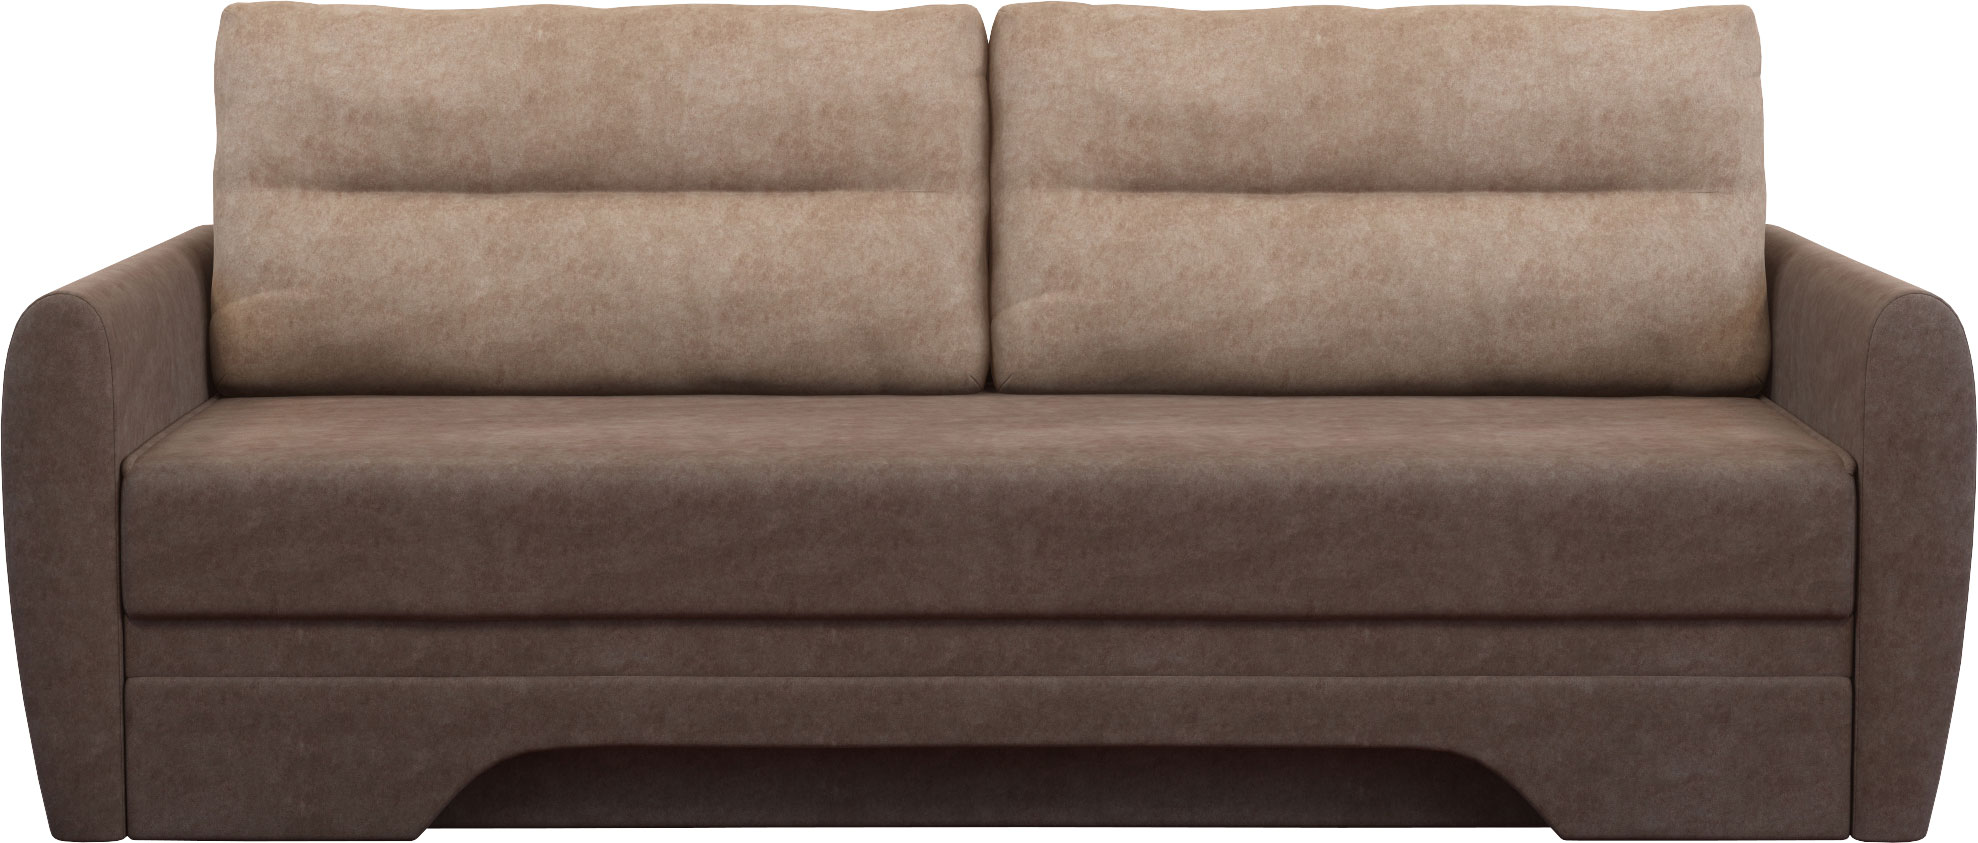 Купить диван Наташа 160 МП 6 - диван еврокнижка Наташа 160 МП 6 недорого вМоскве - цена 24330 руб.